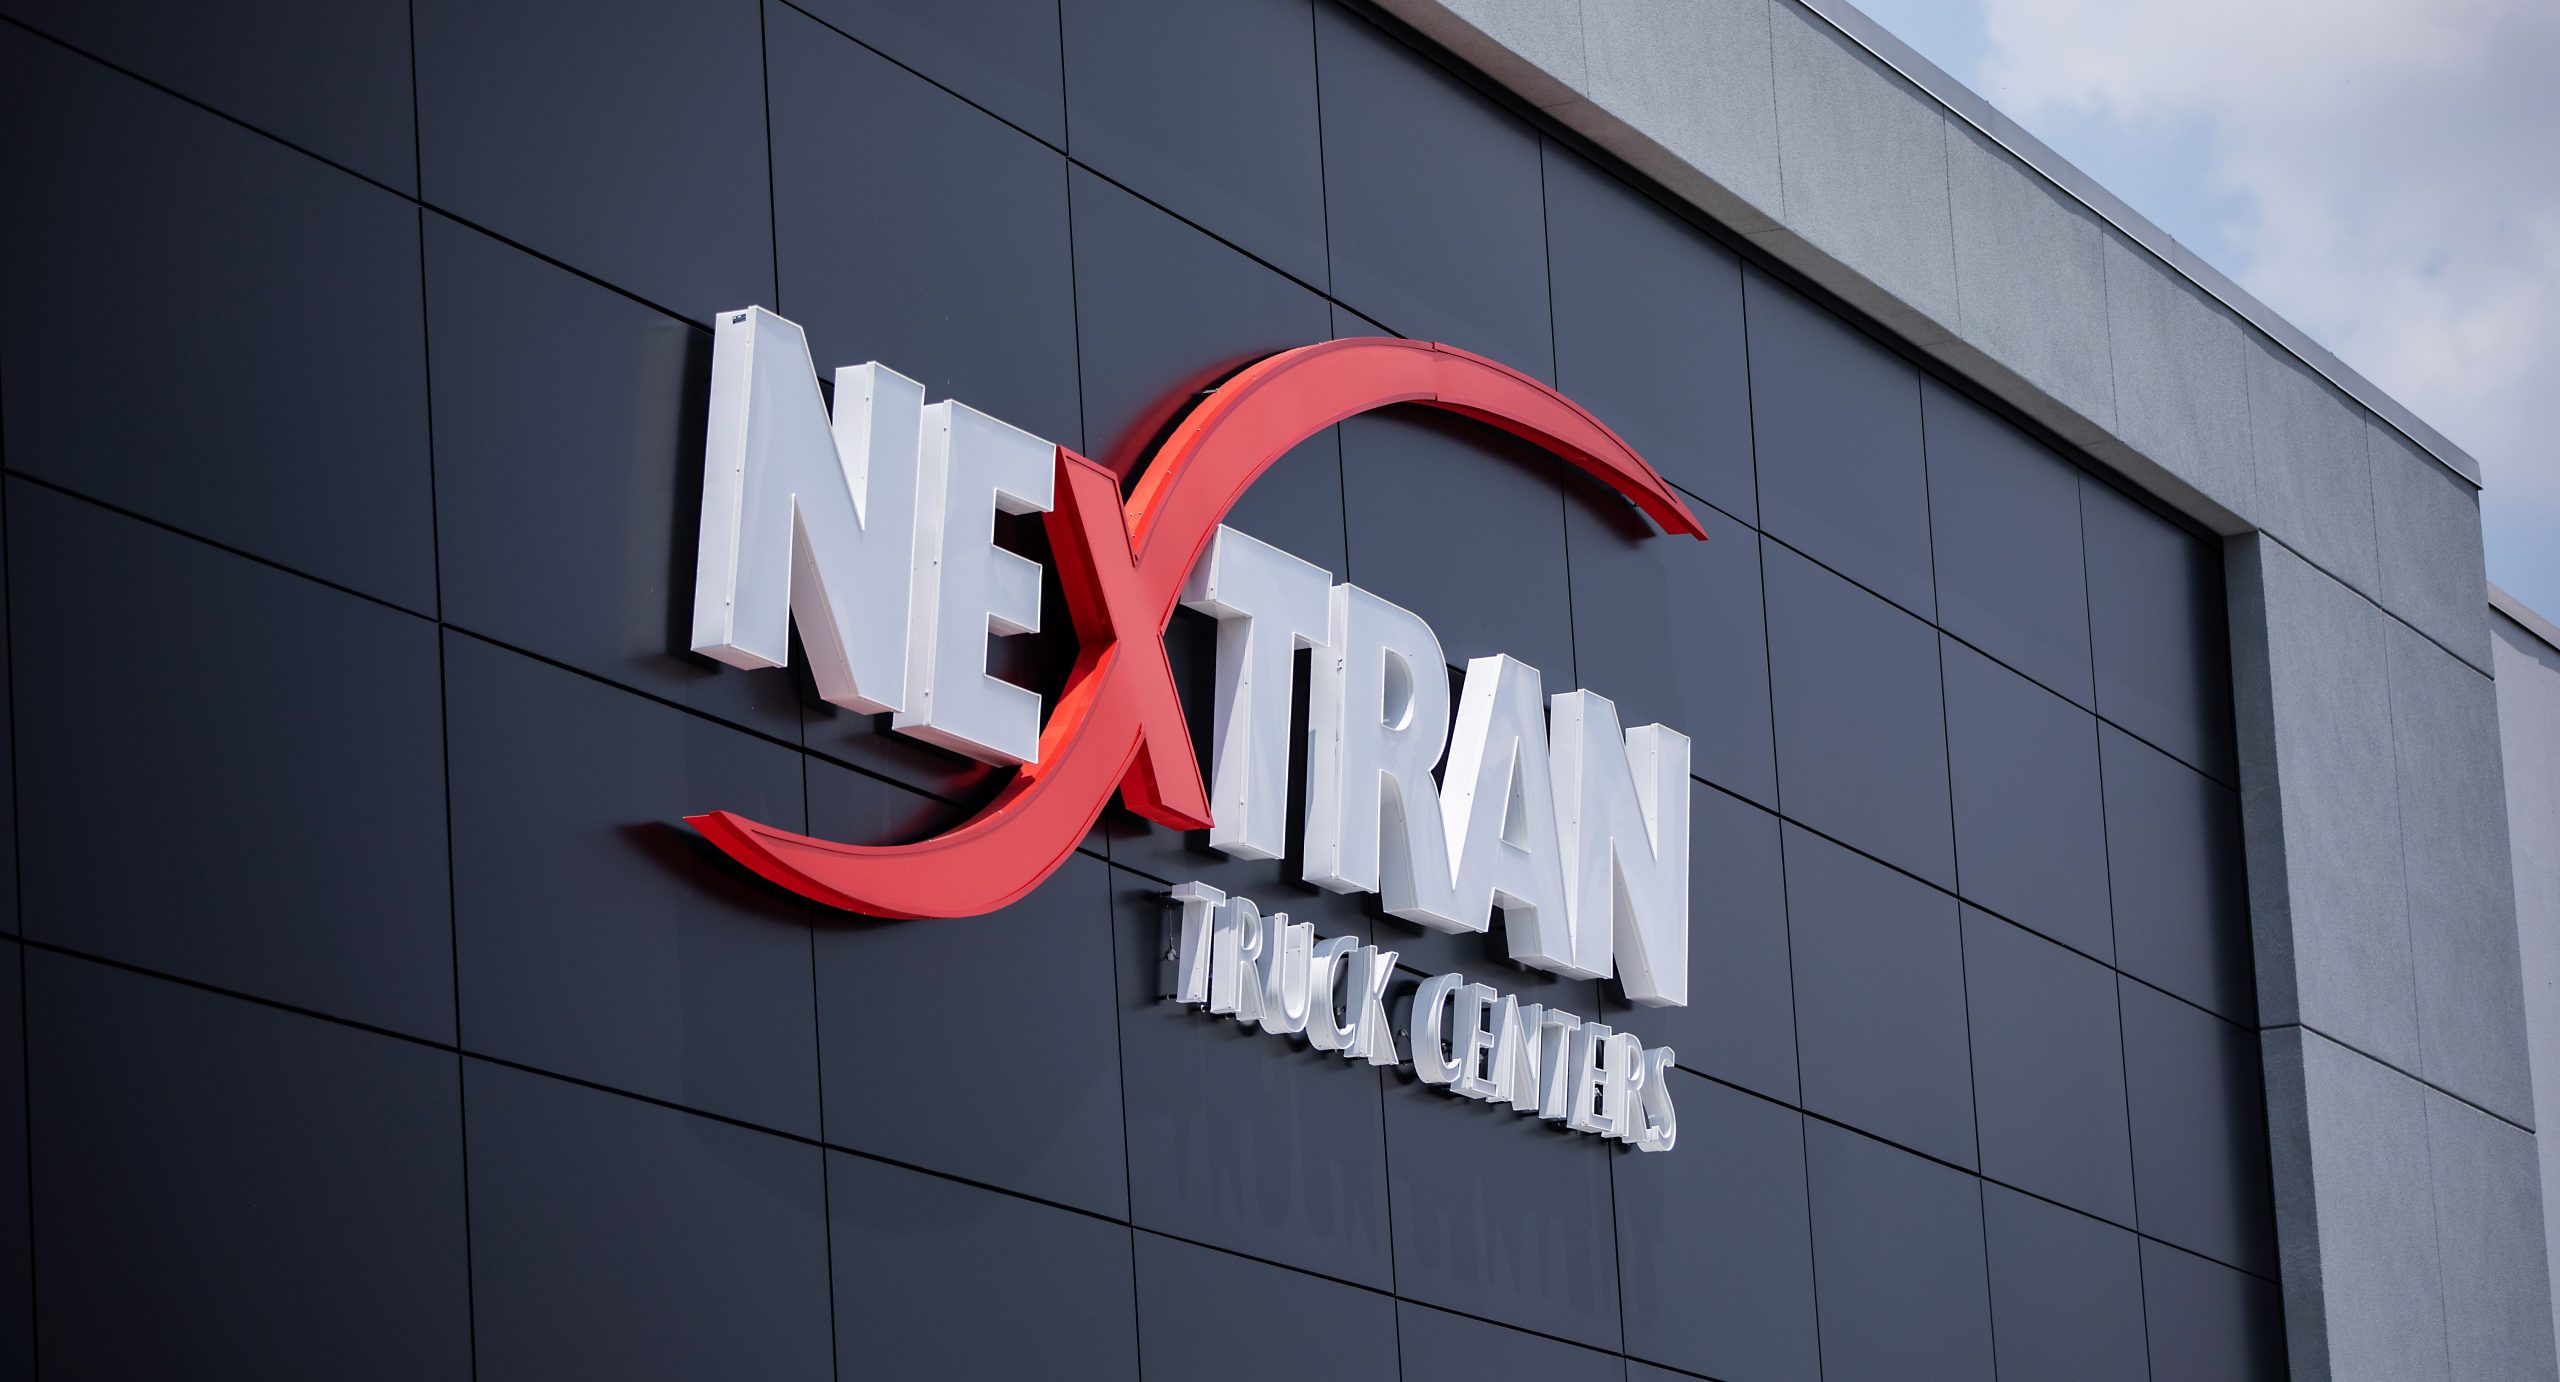 The manufacturing hub in Georgia makes it the perfect location for semi-truck dealerships like Nextran Atlanta.